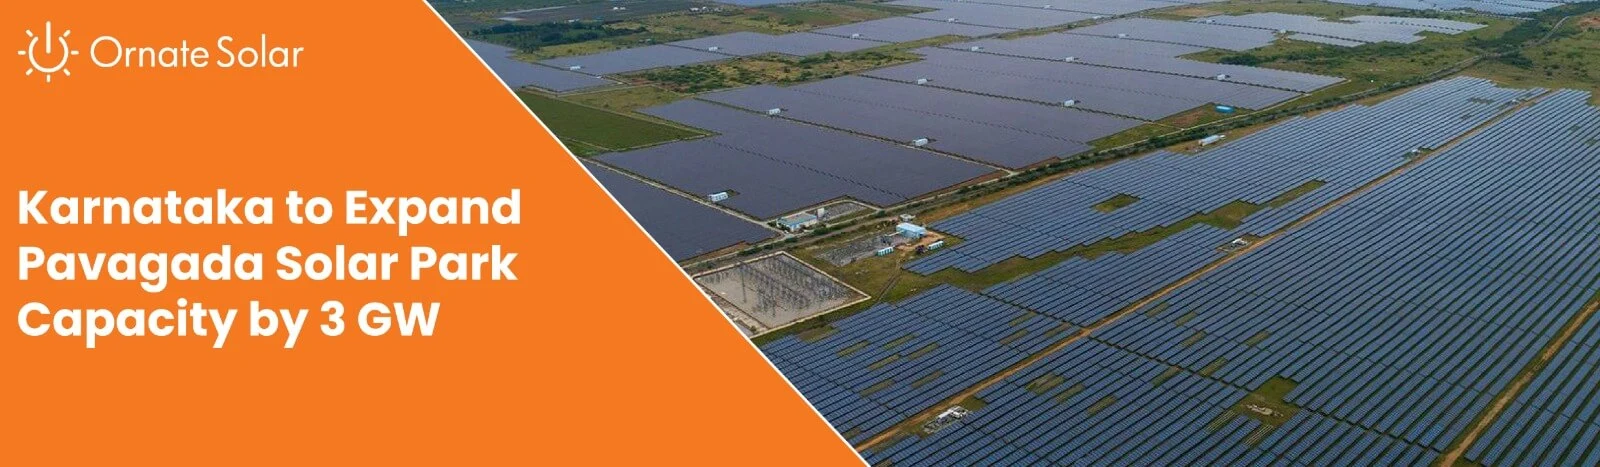 Karnataka to Expand Pavagada Solar Park Capacity by 3 GW